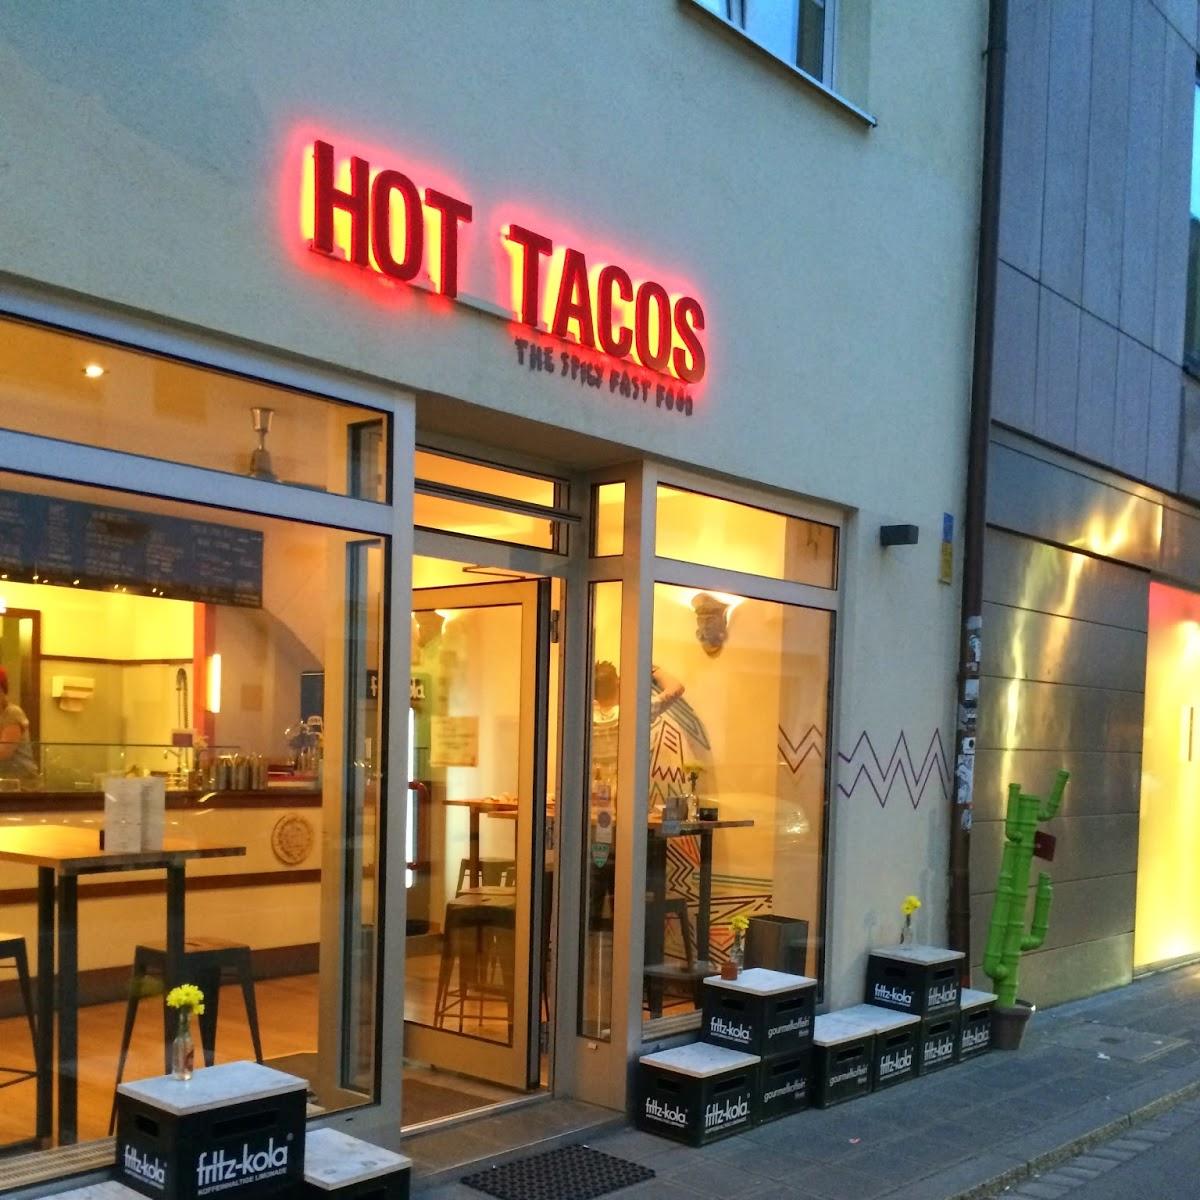 Restaurant "Hot Tacos" in Nürnberg